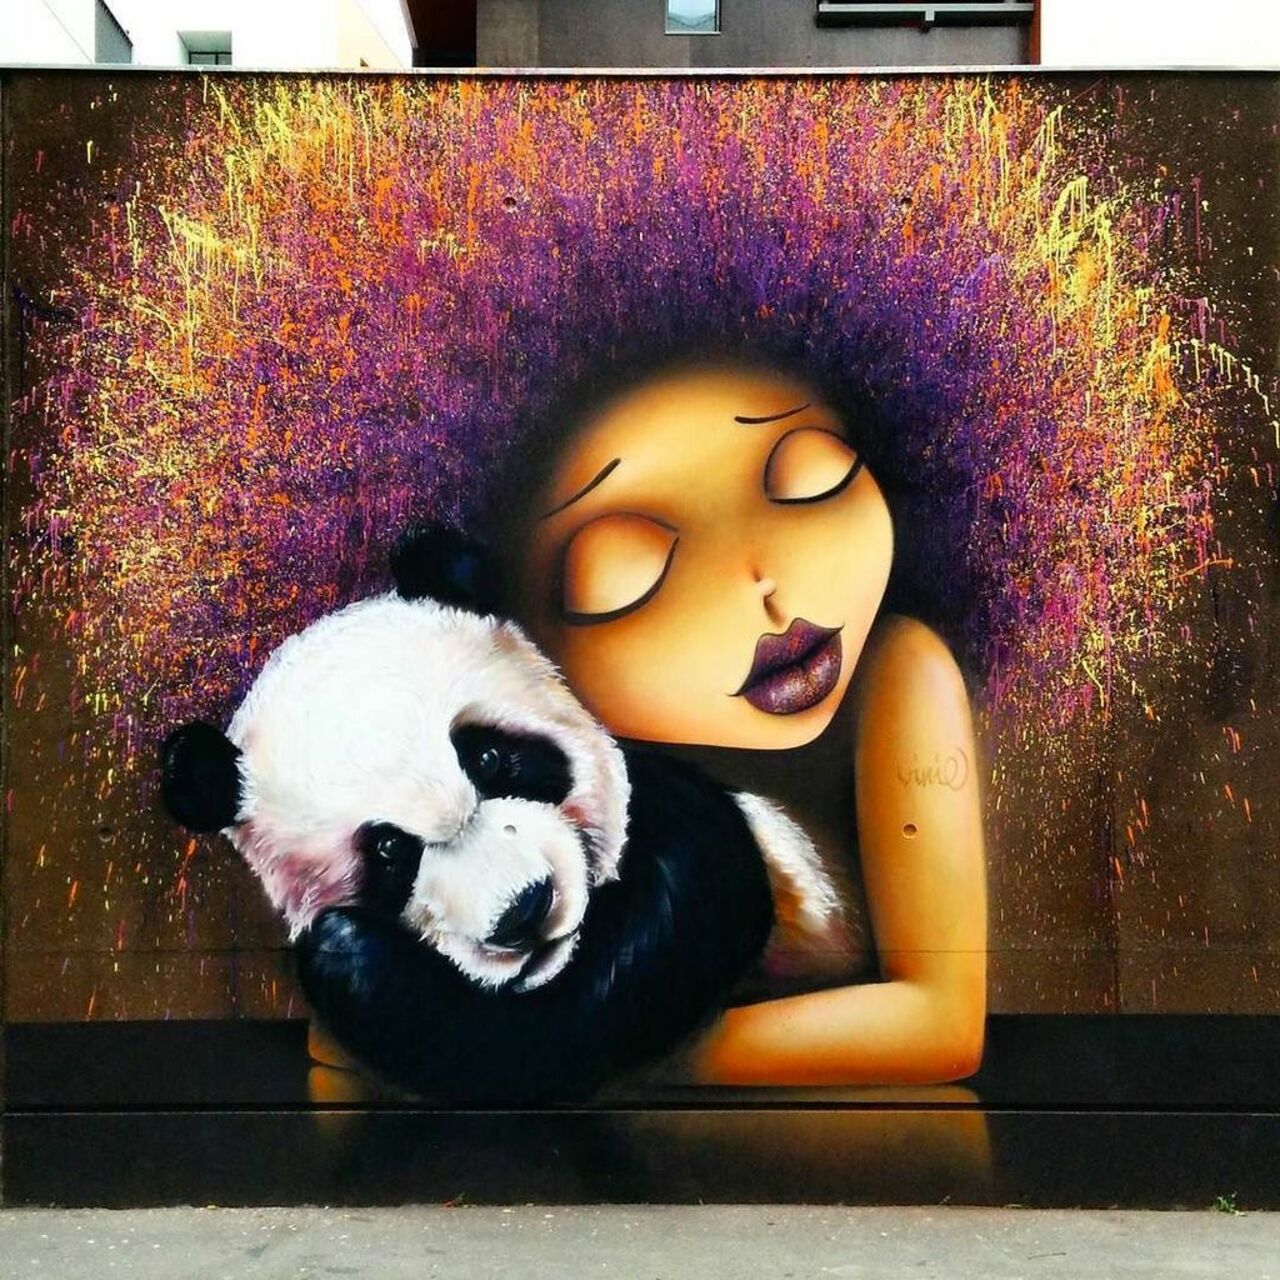 By @viniegraffiti #vinie

#streetart #streetartparis #parisstreetart #parisgraffiti #graffiti #graffitiart #urbanar… https://t.co/NUr0QoloU8